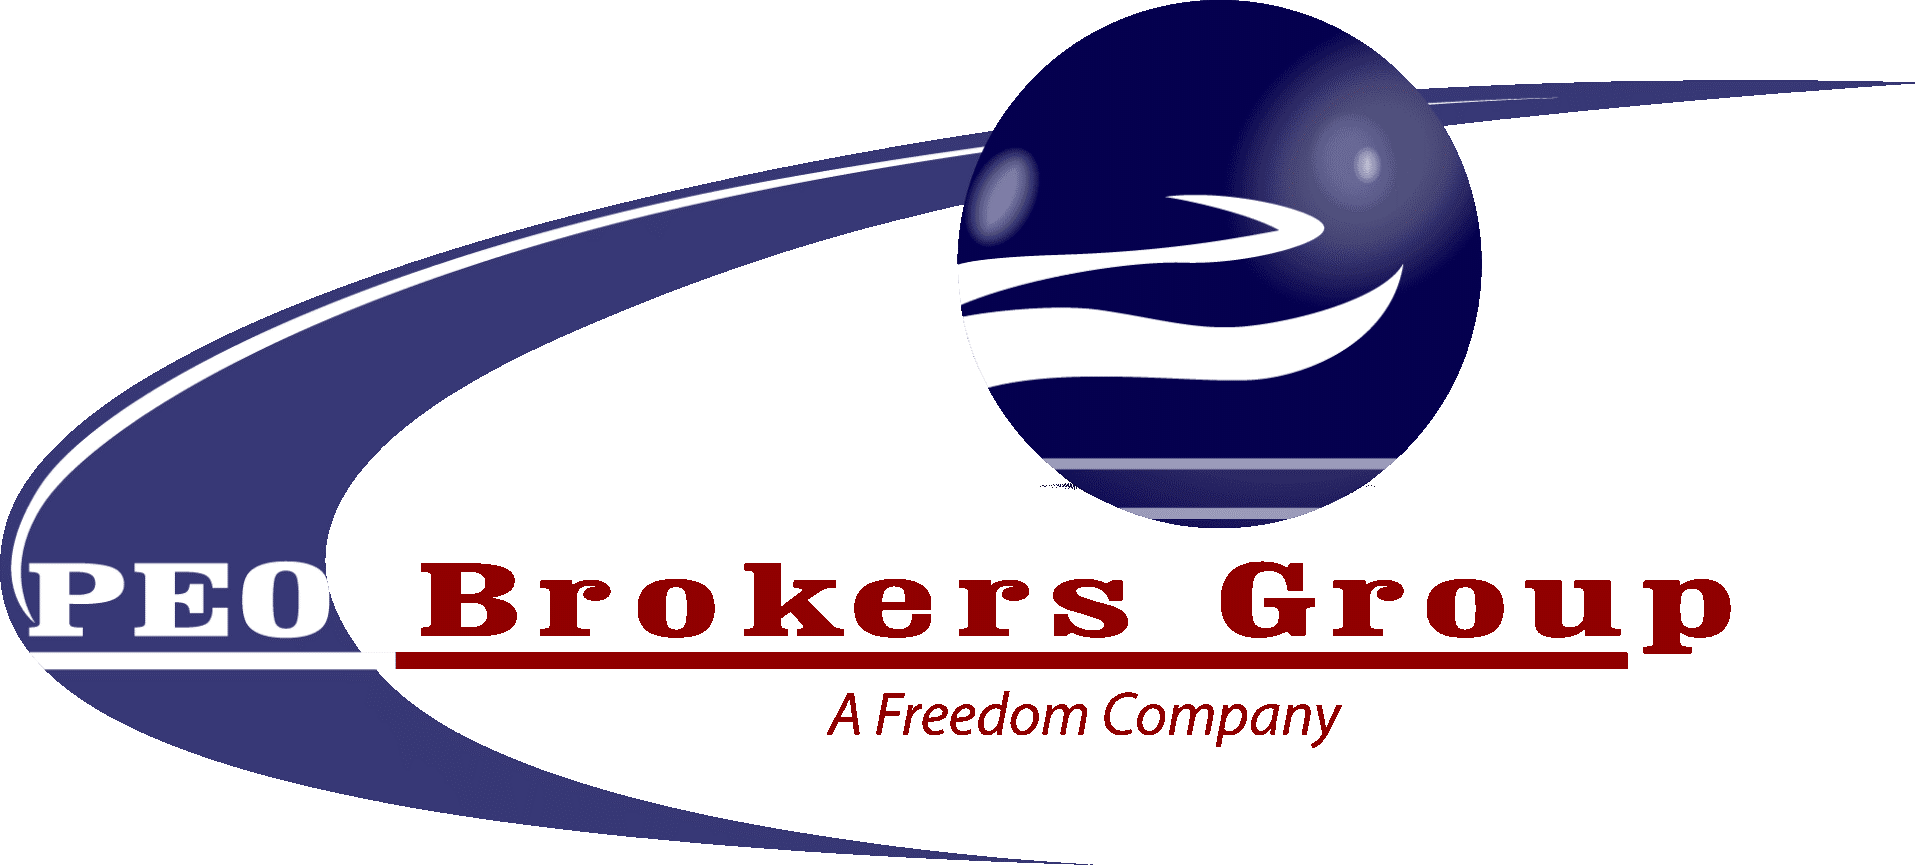 PEO Brokers Group